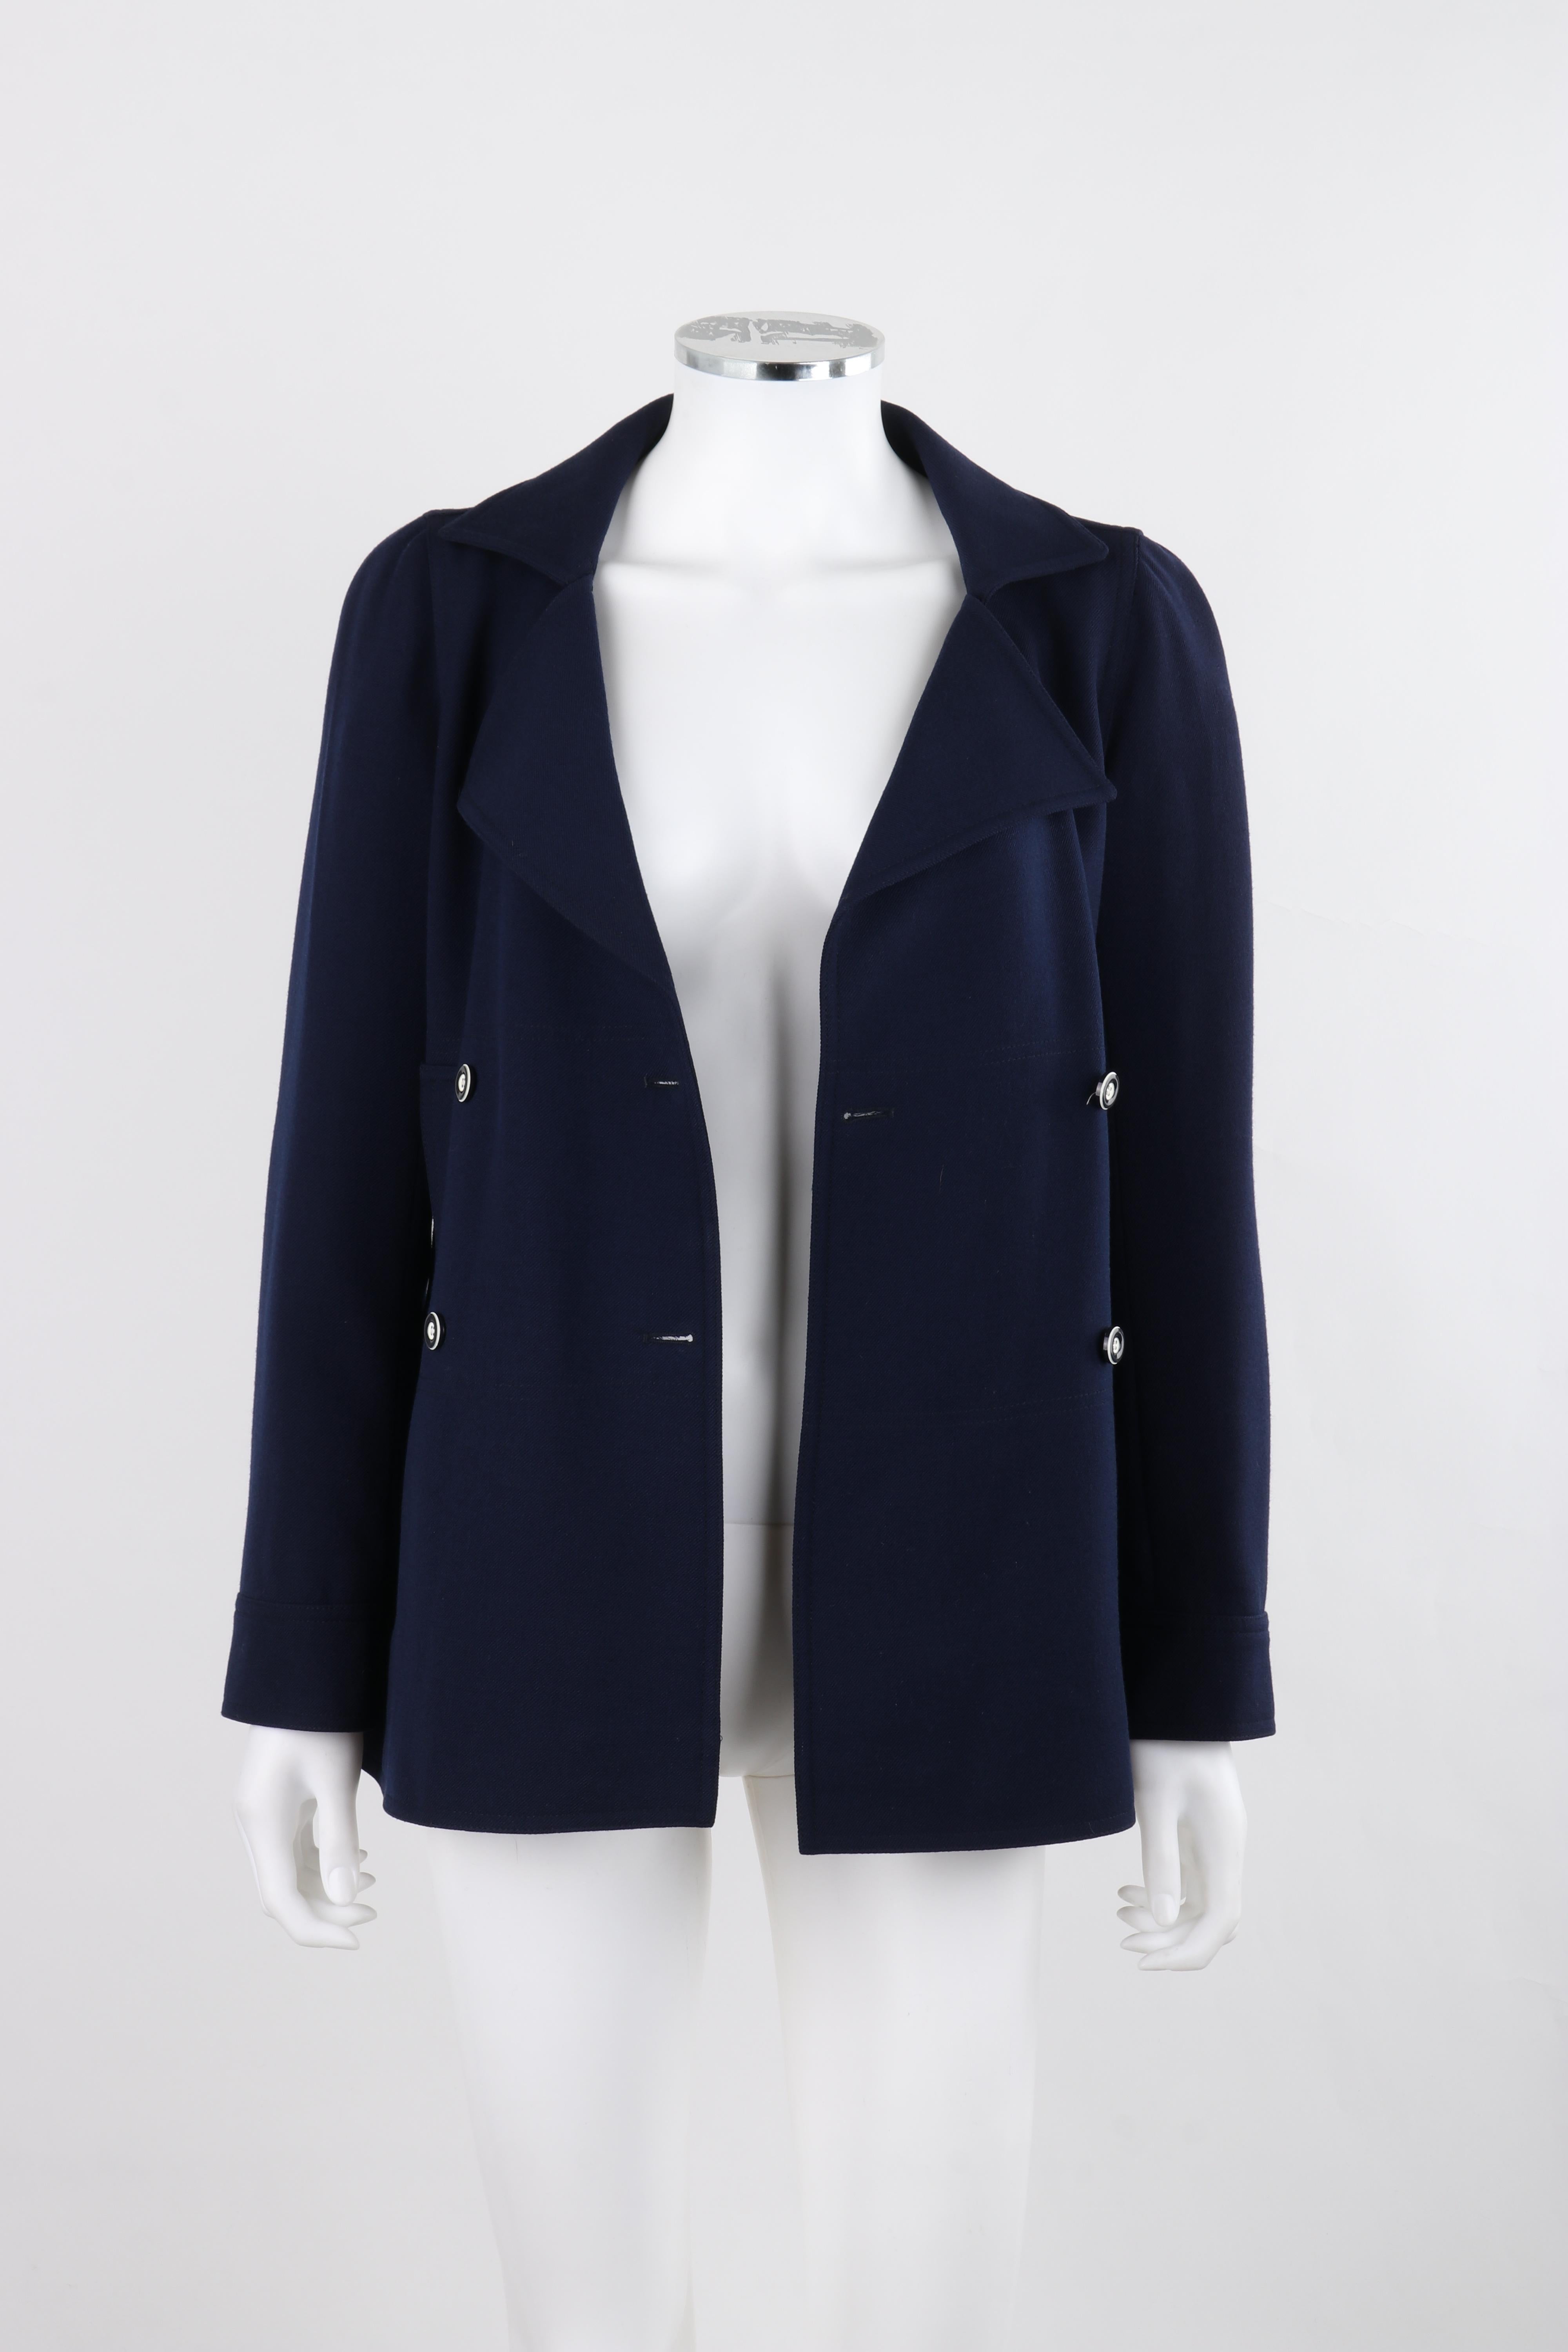 COURREGES PARIS c.1970's Vtg Navy Blue Wool Double Breasted Blazer Jacket  For Sale 7